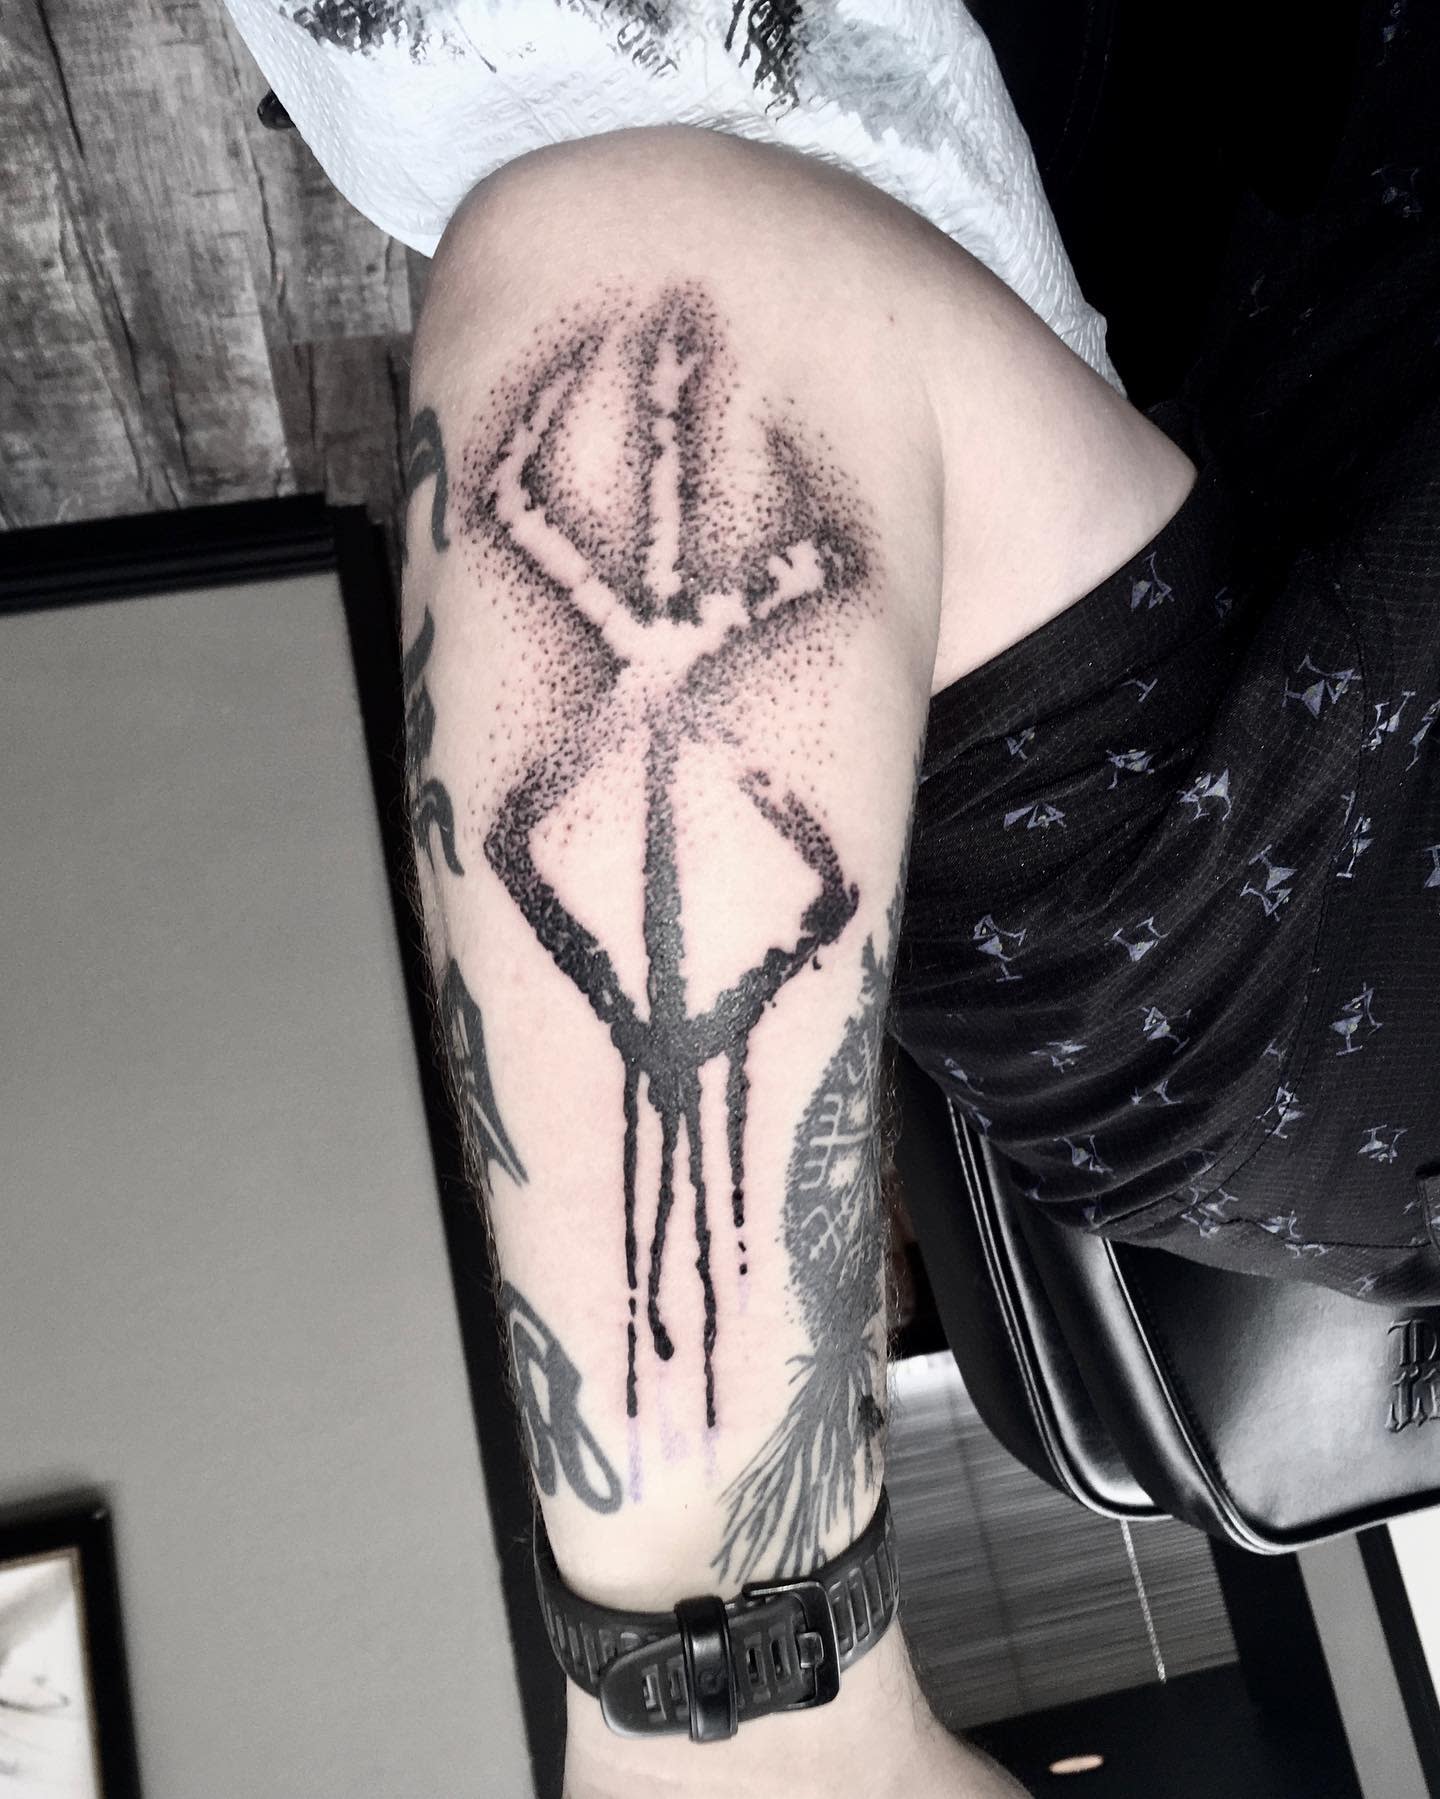 Plant Daddy  Twitter પર Forever marked with the Brand of Sacrifice  berserk tattoos httpstcoyVRynGfsJv  Twitter